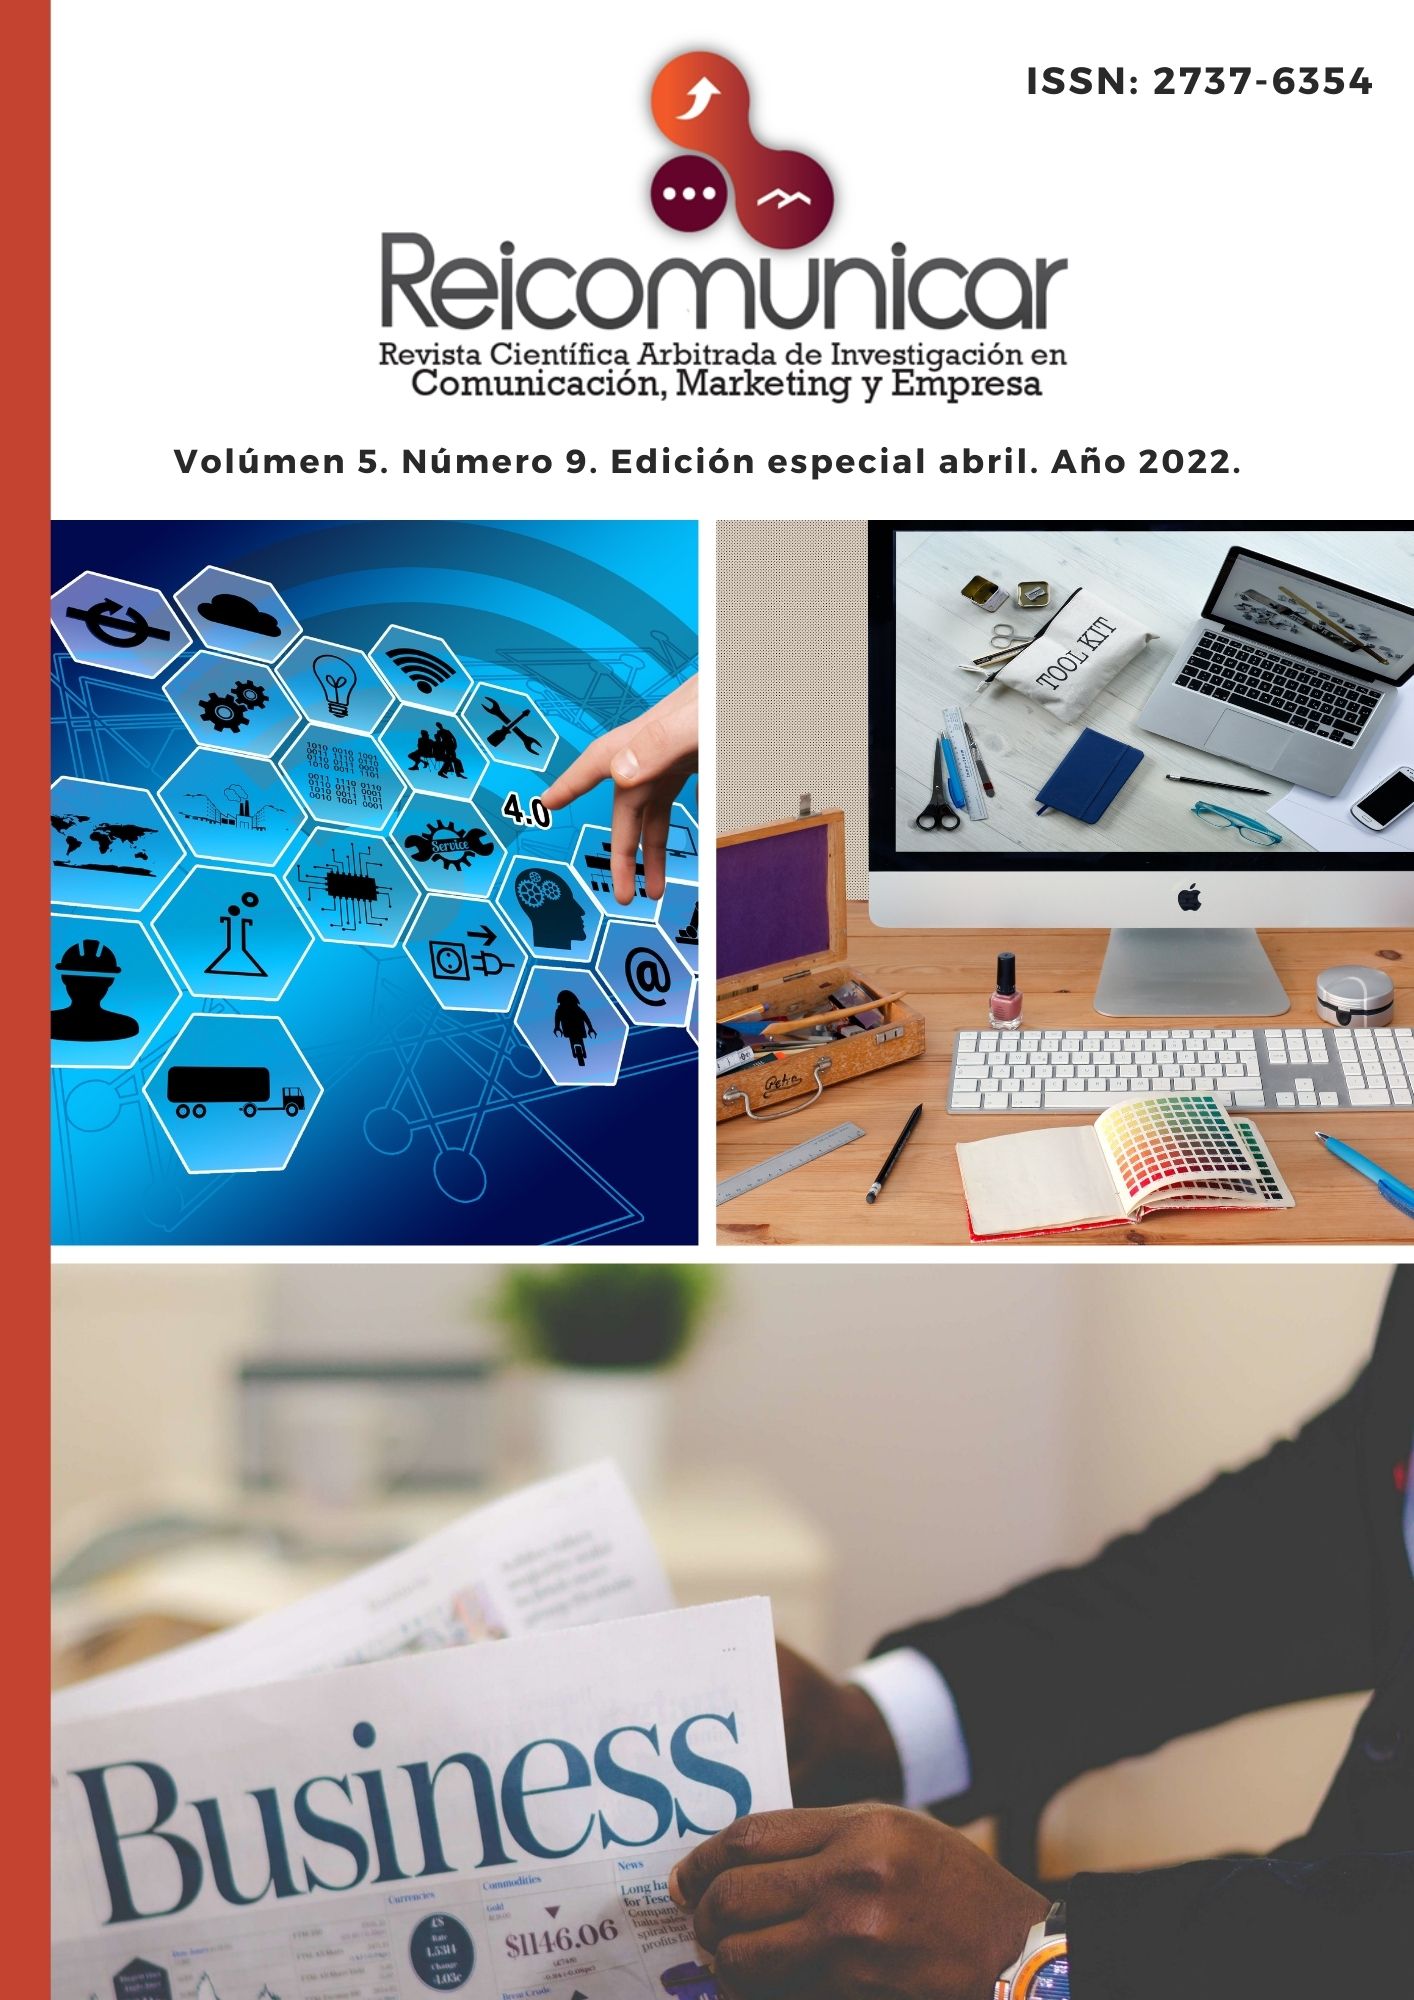 					Ver Vol. 5 Núm. 9 Ed. esp. (2022): Revista Científica Arbitrada de Investigación en Comunicación, Marketing y Empresa REICOMUNICAR. (Edición especial abril 2022)
				